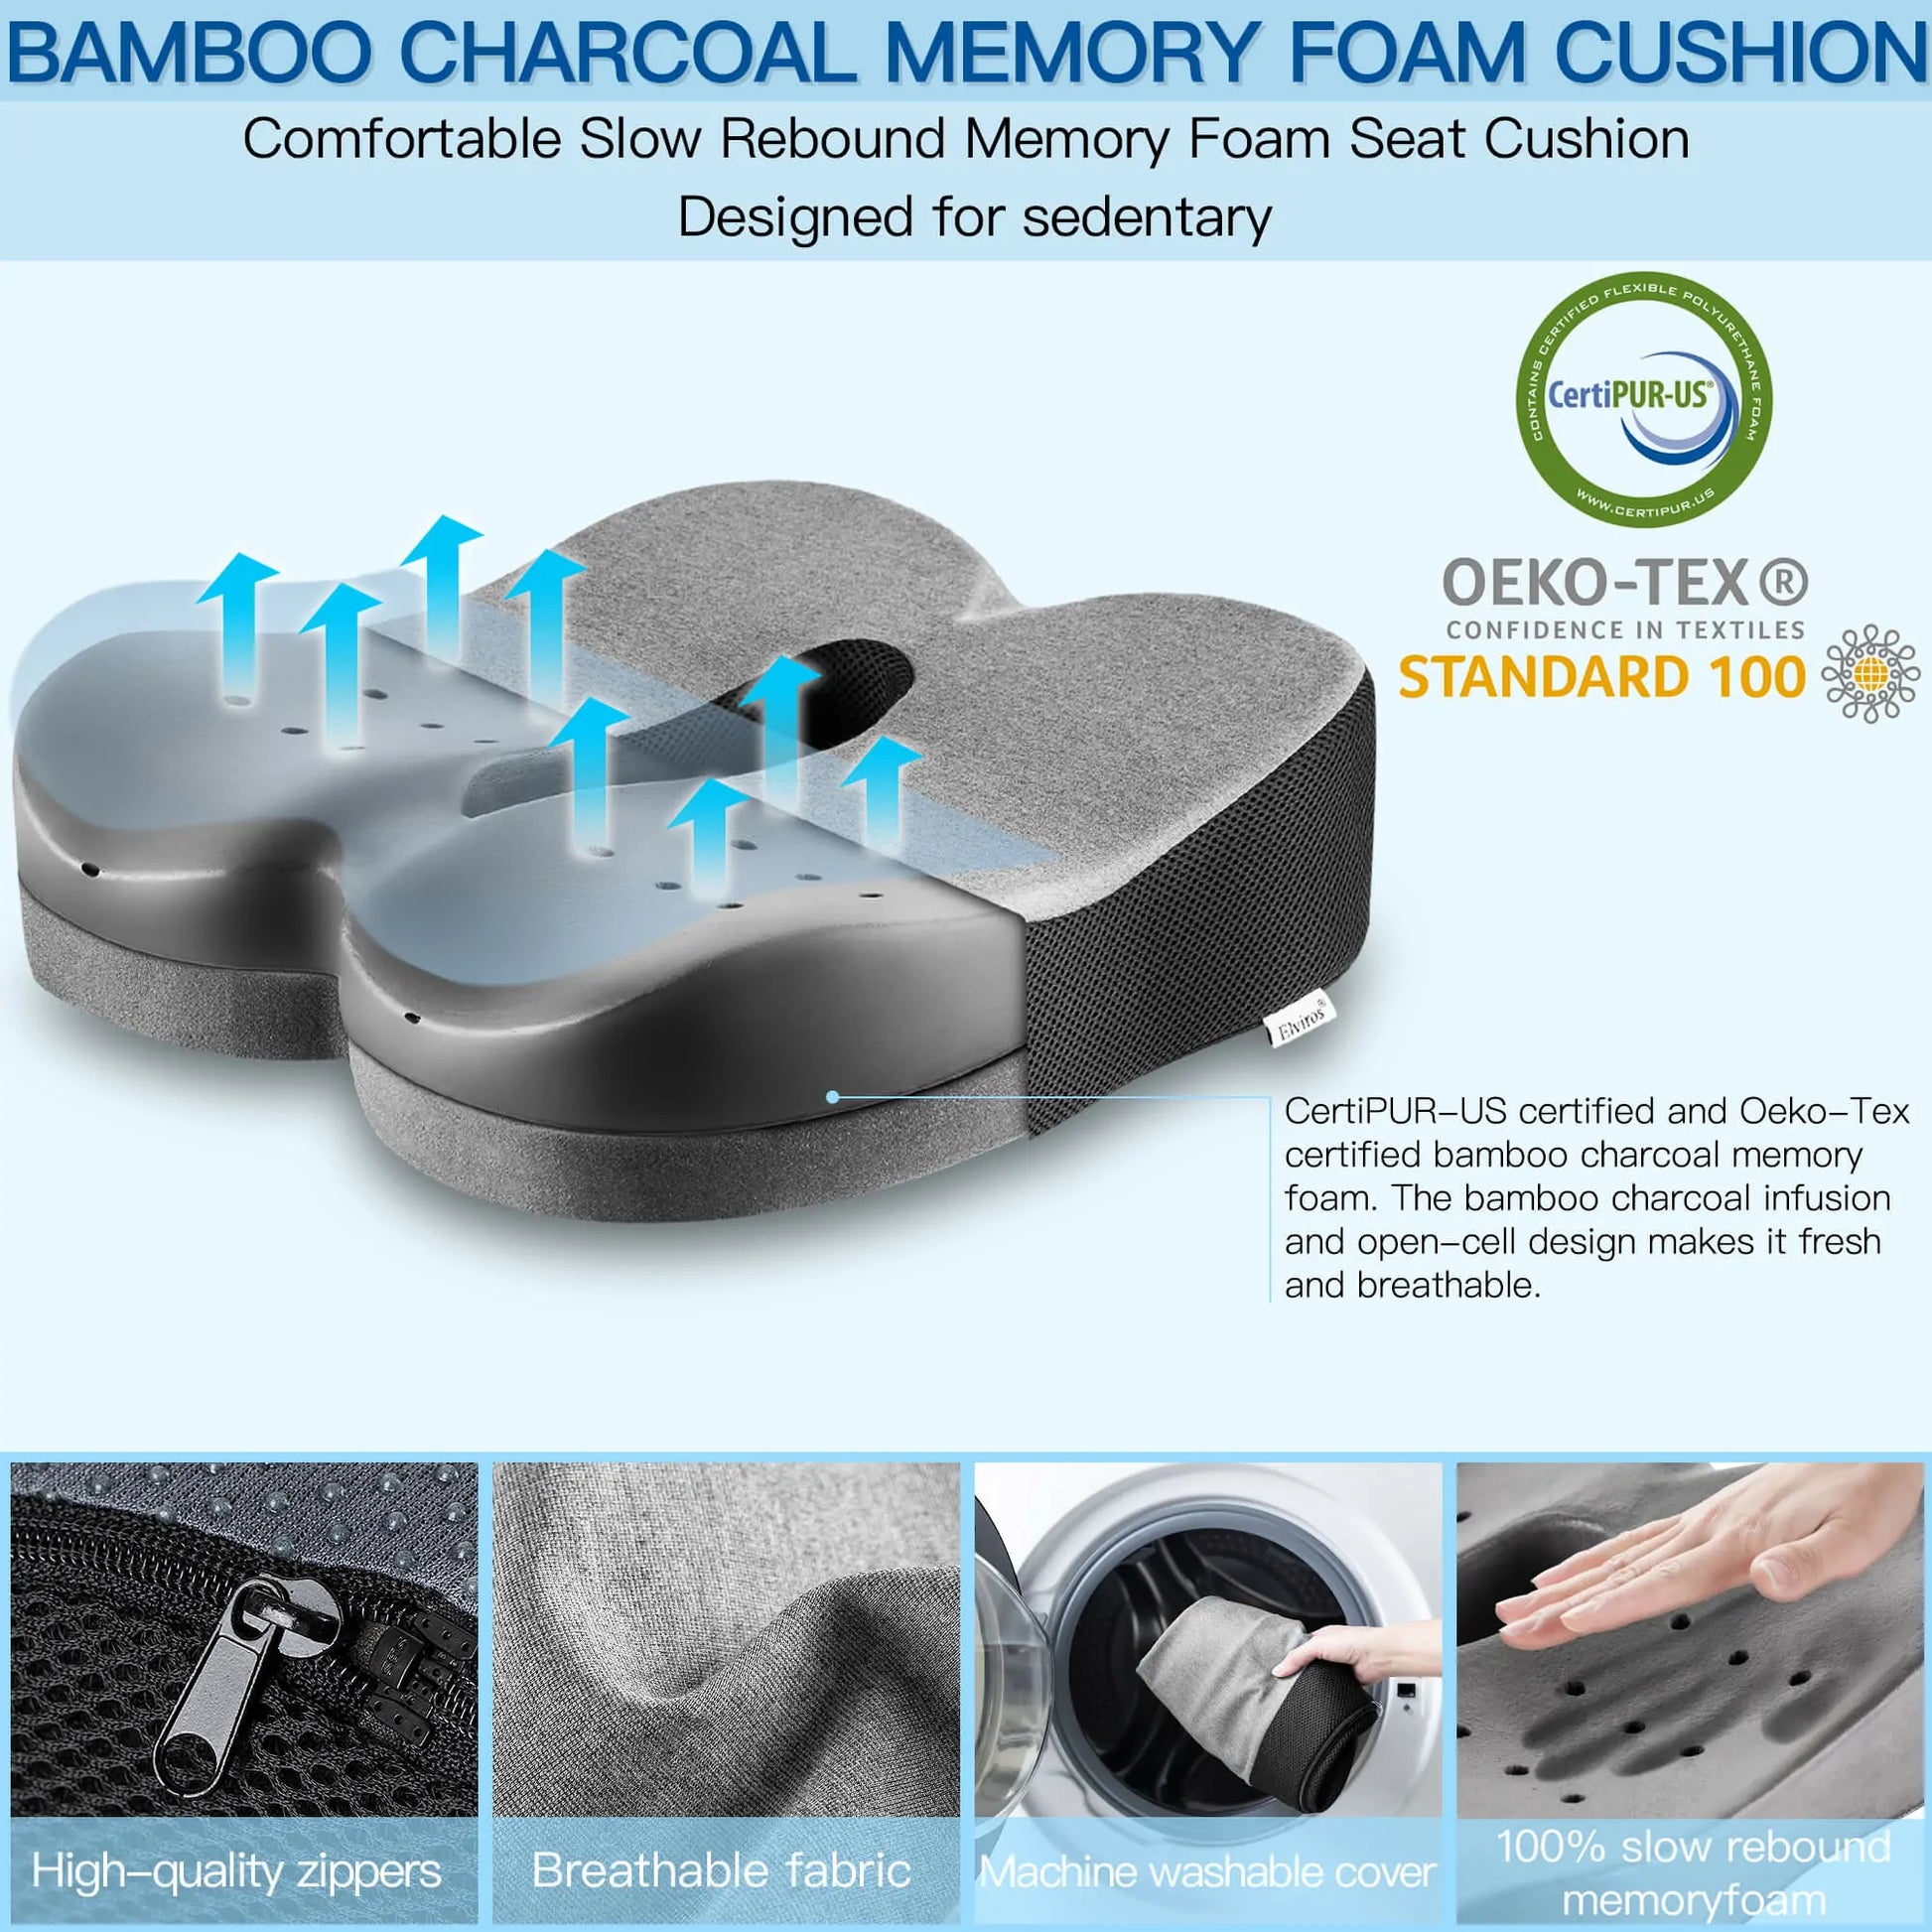 Memory Foam Chair Cushion - Machine Washable Pad With Nonslip Back